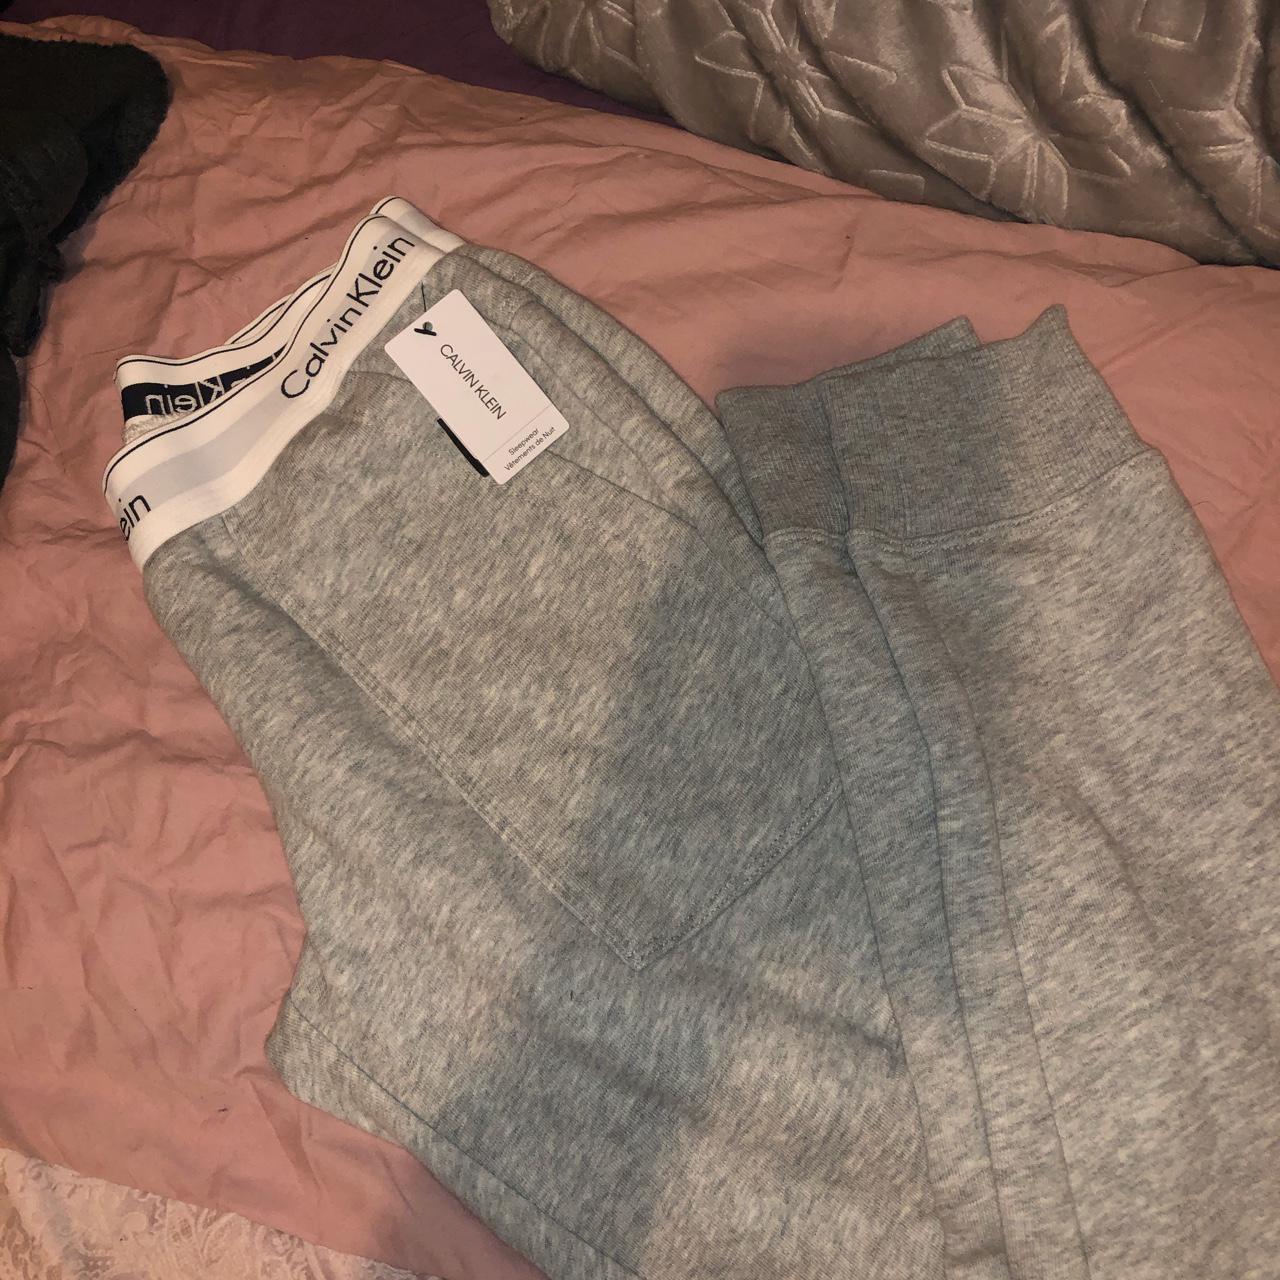 Women's Calvin Klein Sleepwear Sweatpants Gray And Black Size